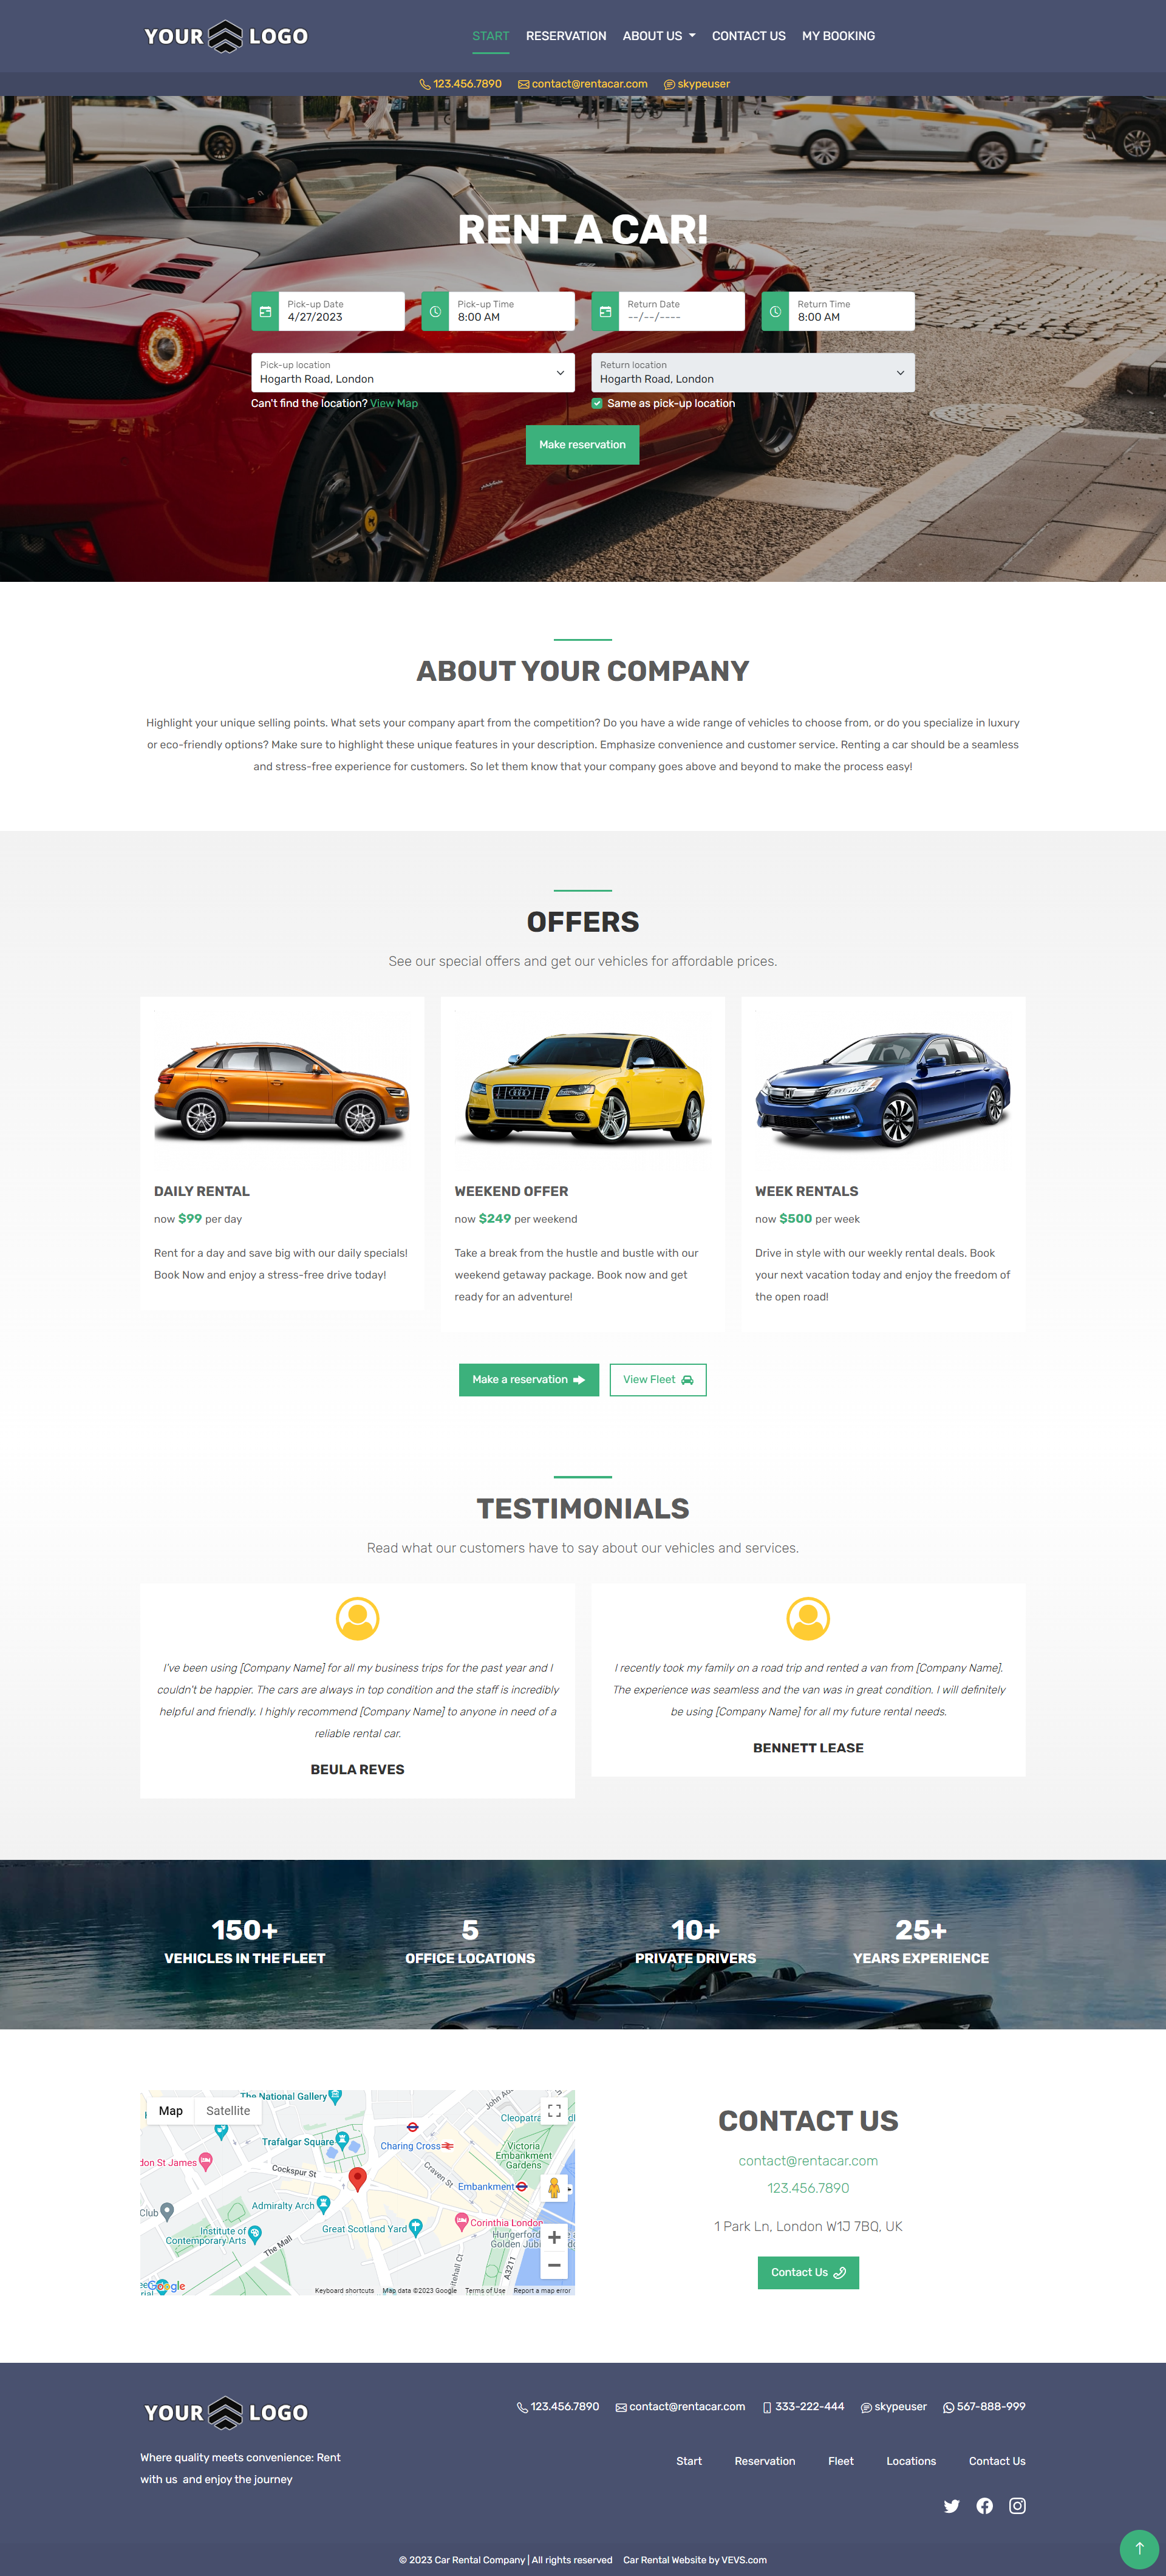 VEVS Business Software & Website - Car Rental Software - Website Template